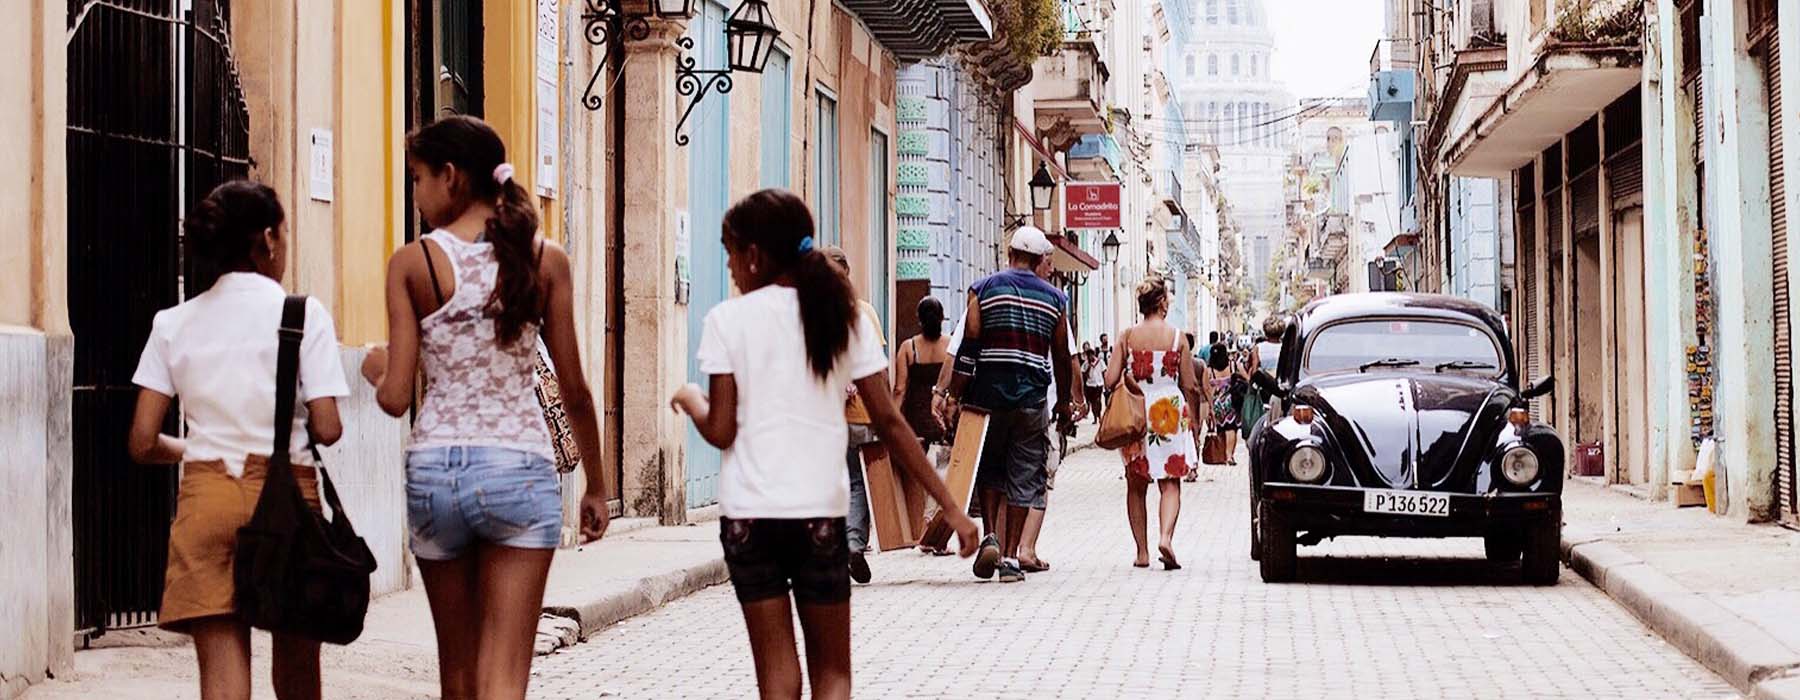 Mon appart en ville Cuba